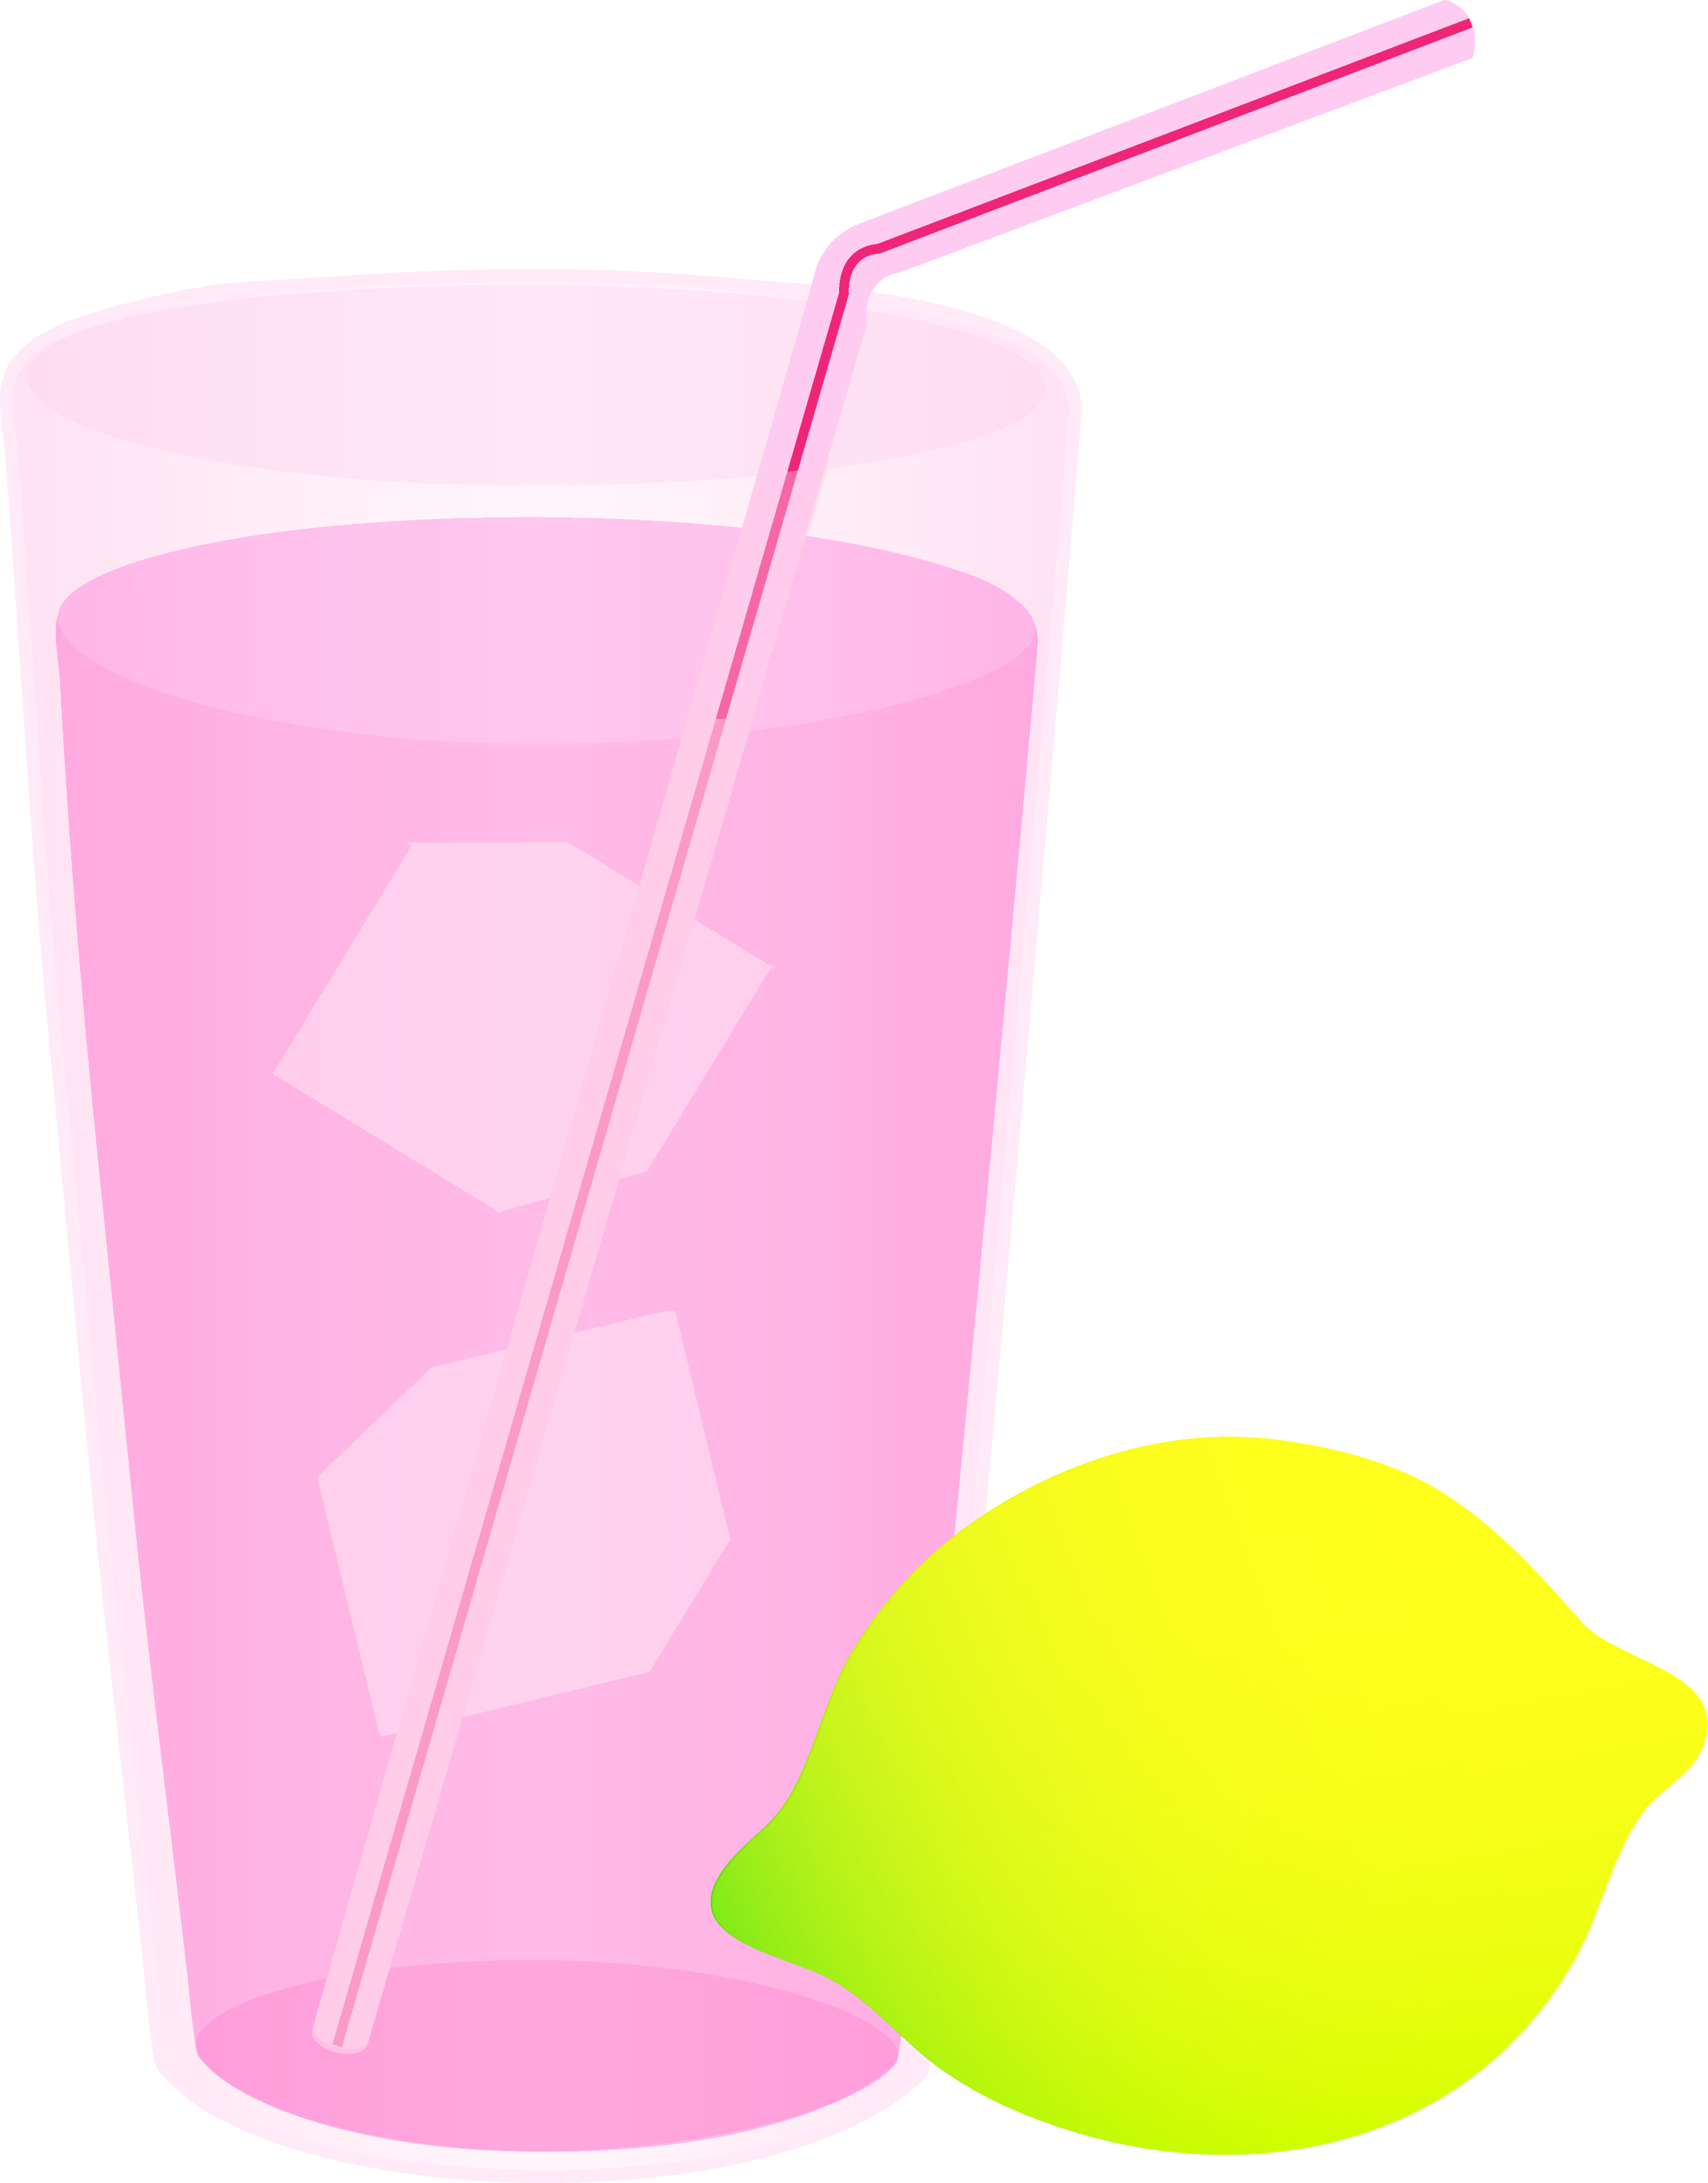 Glass Of Pink Lemonade Free Clip Art